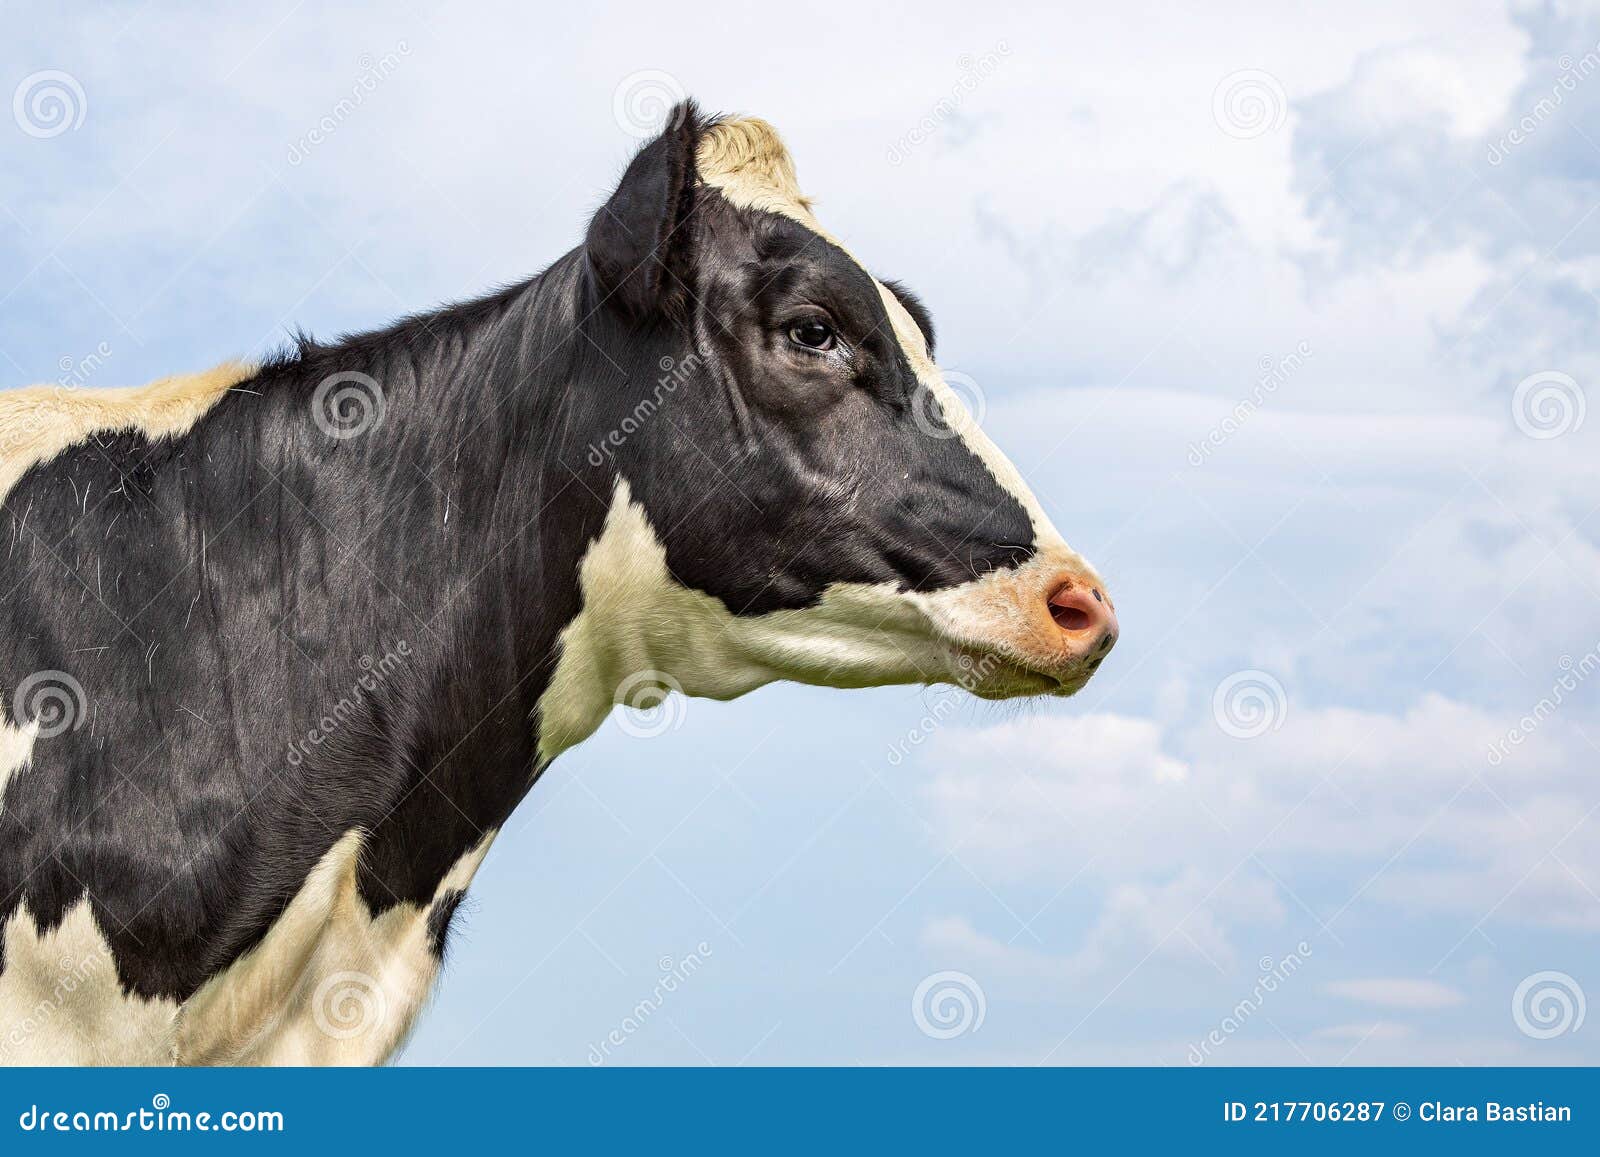 portrait profil of a calm mature cow head and a blue sky background